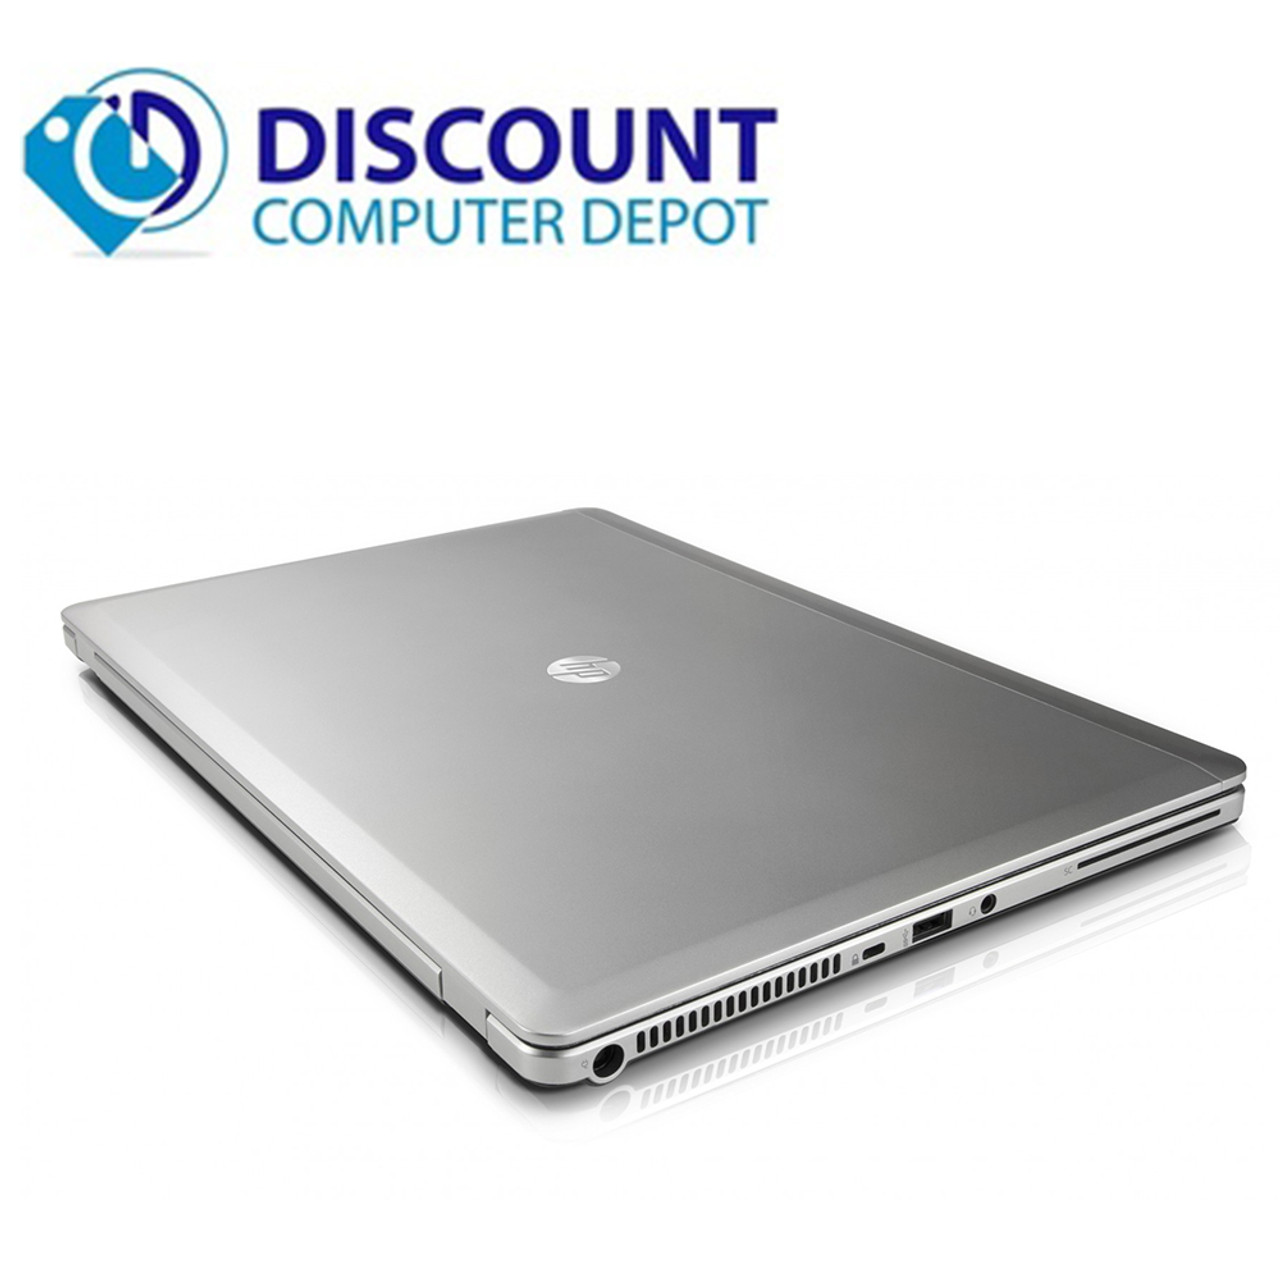 EliteBook Folio 9470m Base Model Notebook PC